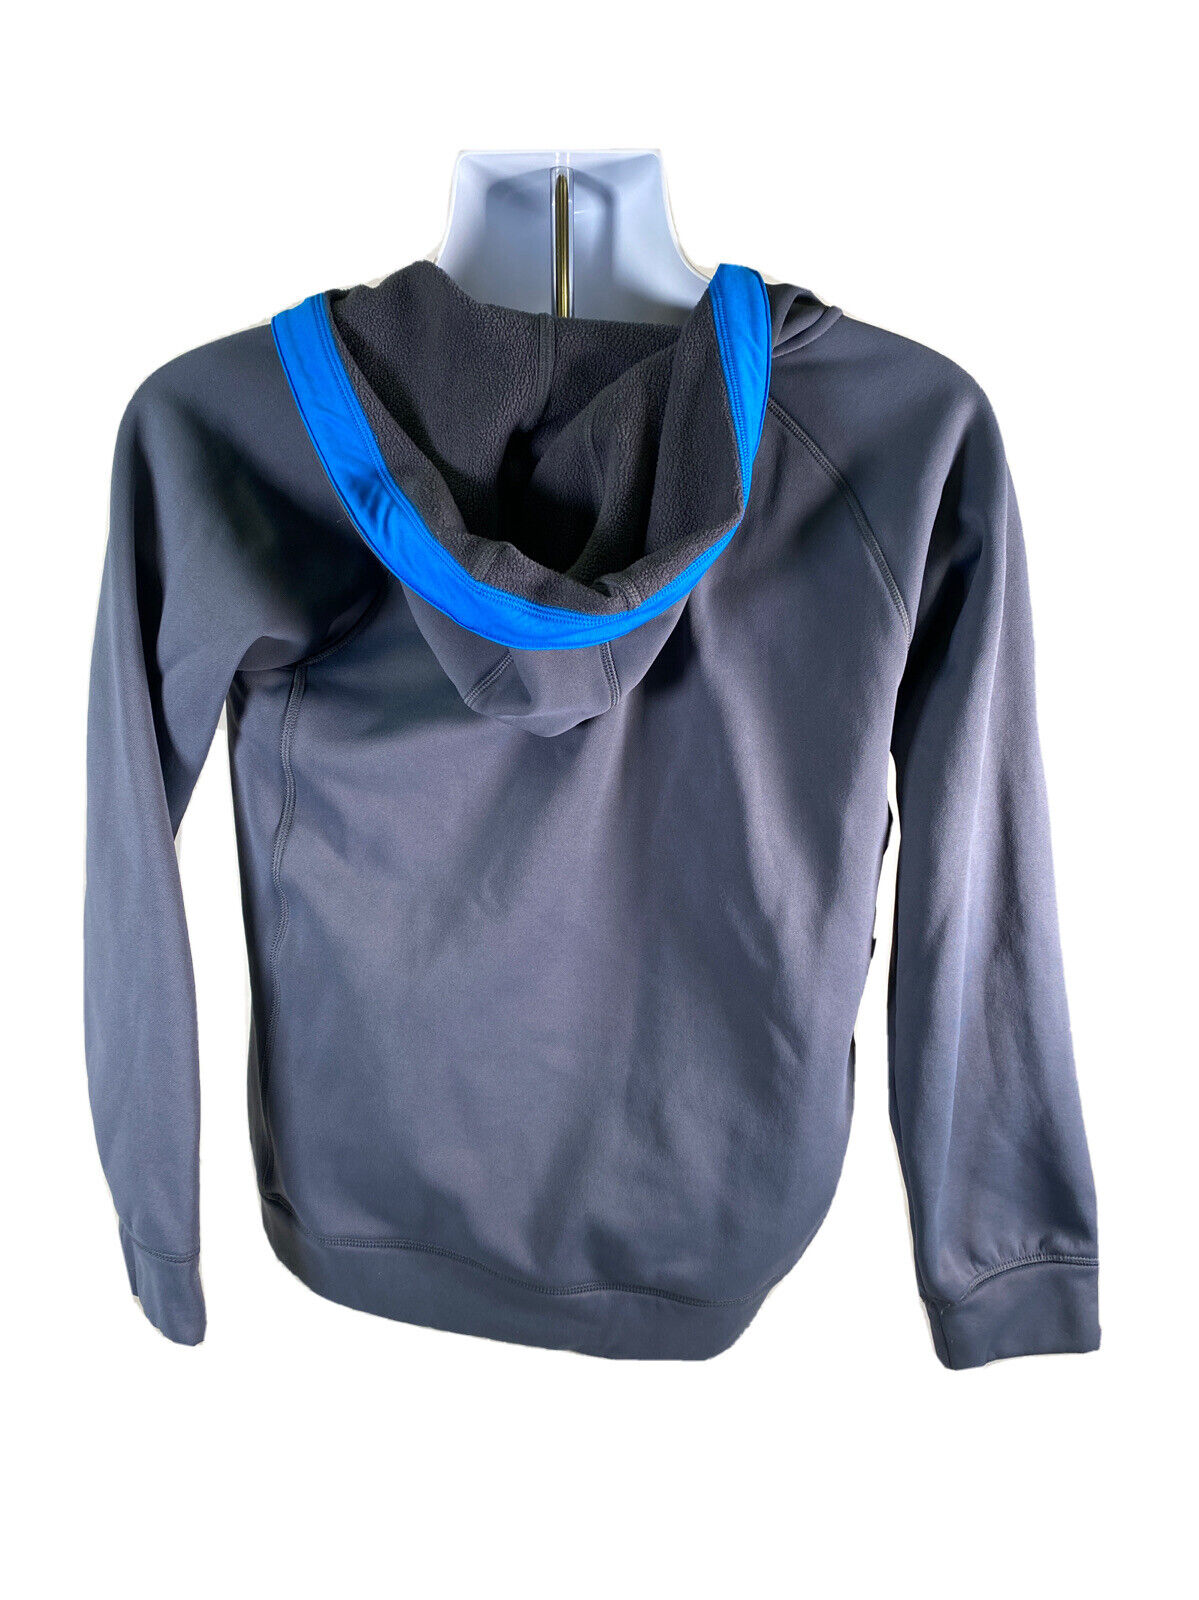 Adidas Boys Youth Blue Full Zip Fleece Lined Hoodie Sweatshirt Sz XL 18